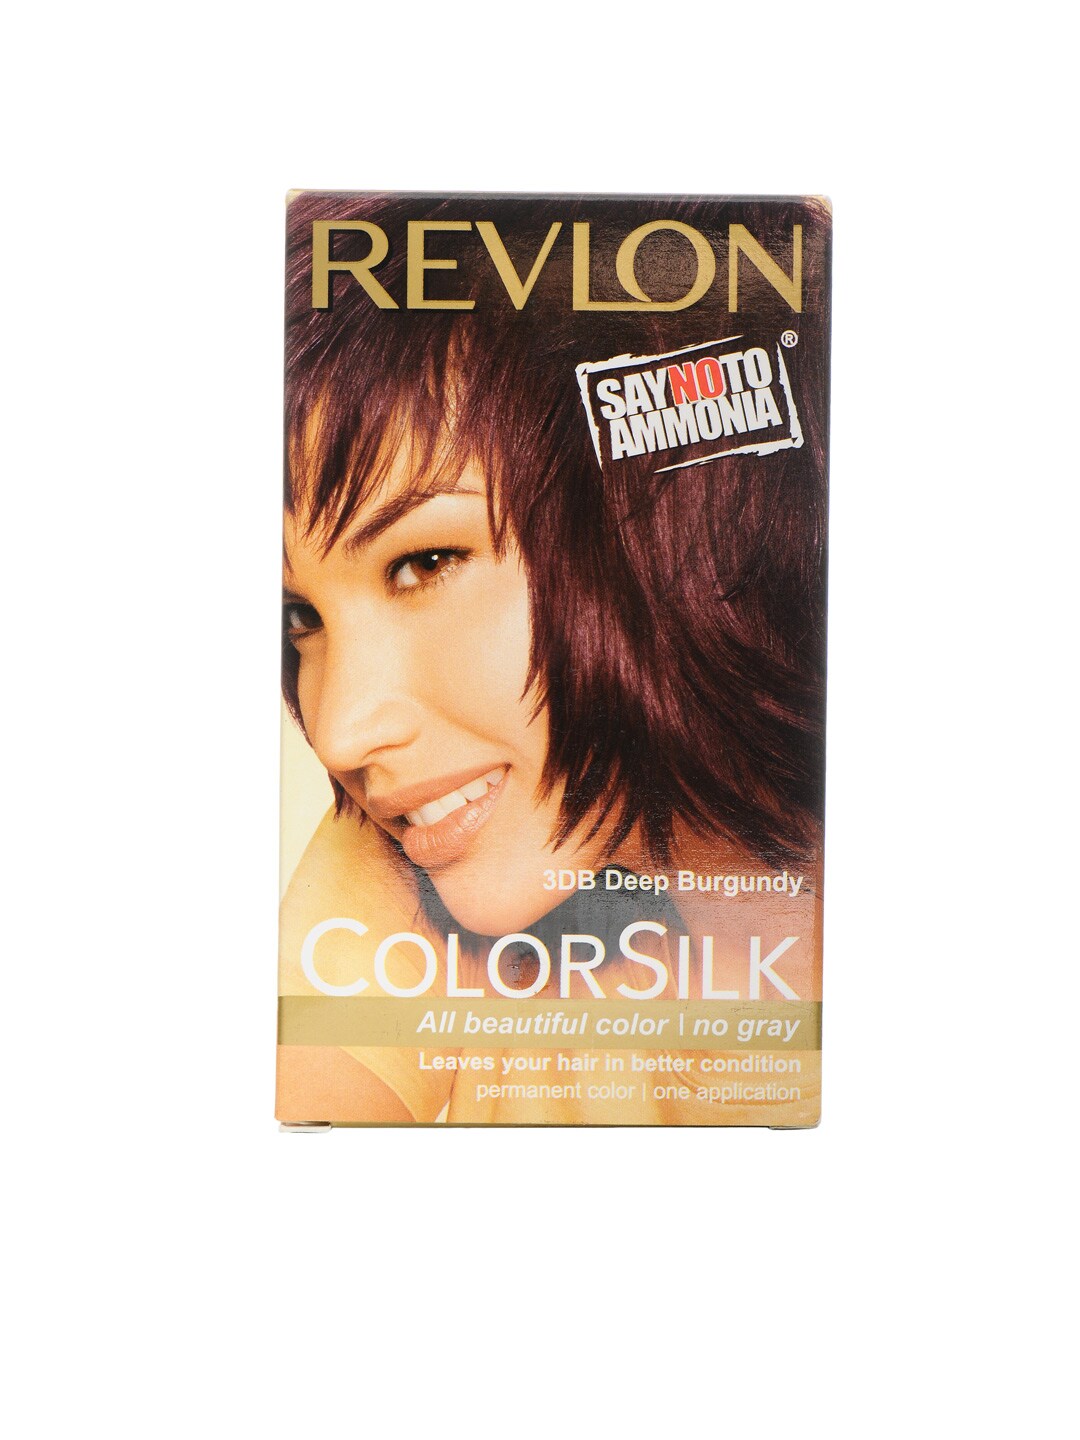 Revlon Colorsilk 3DB Deep Burgundy Hair Colour